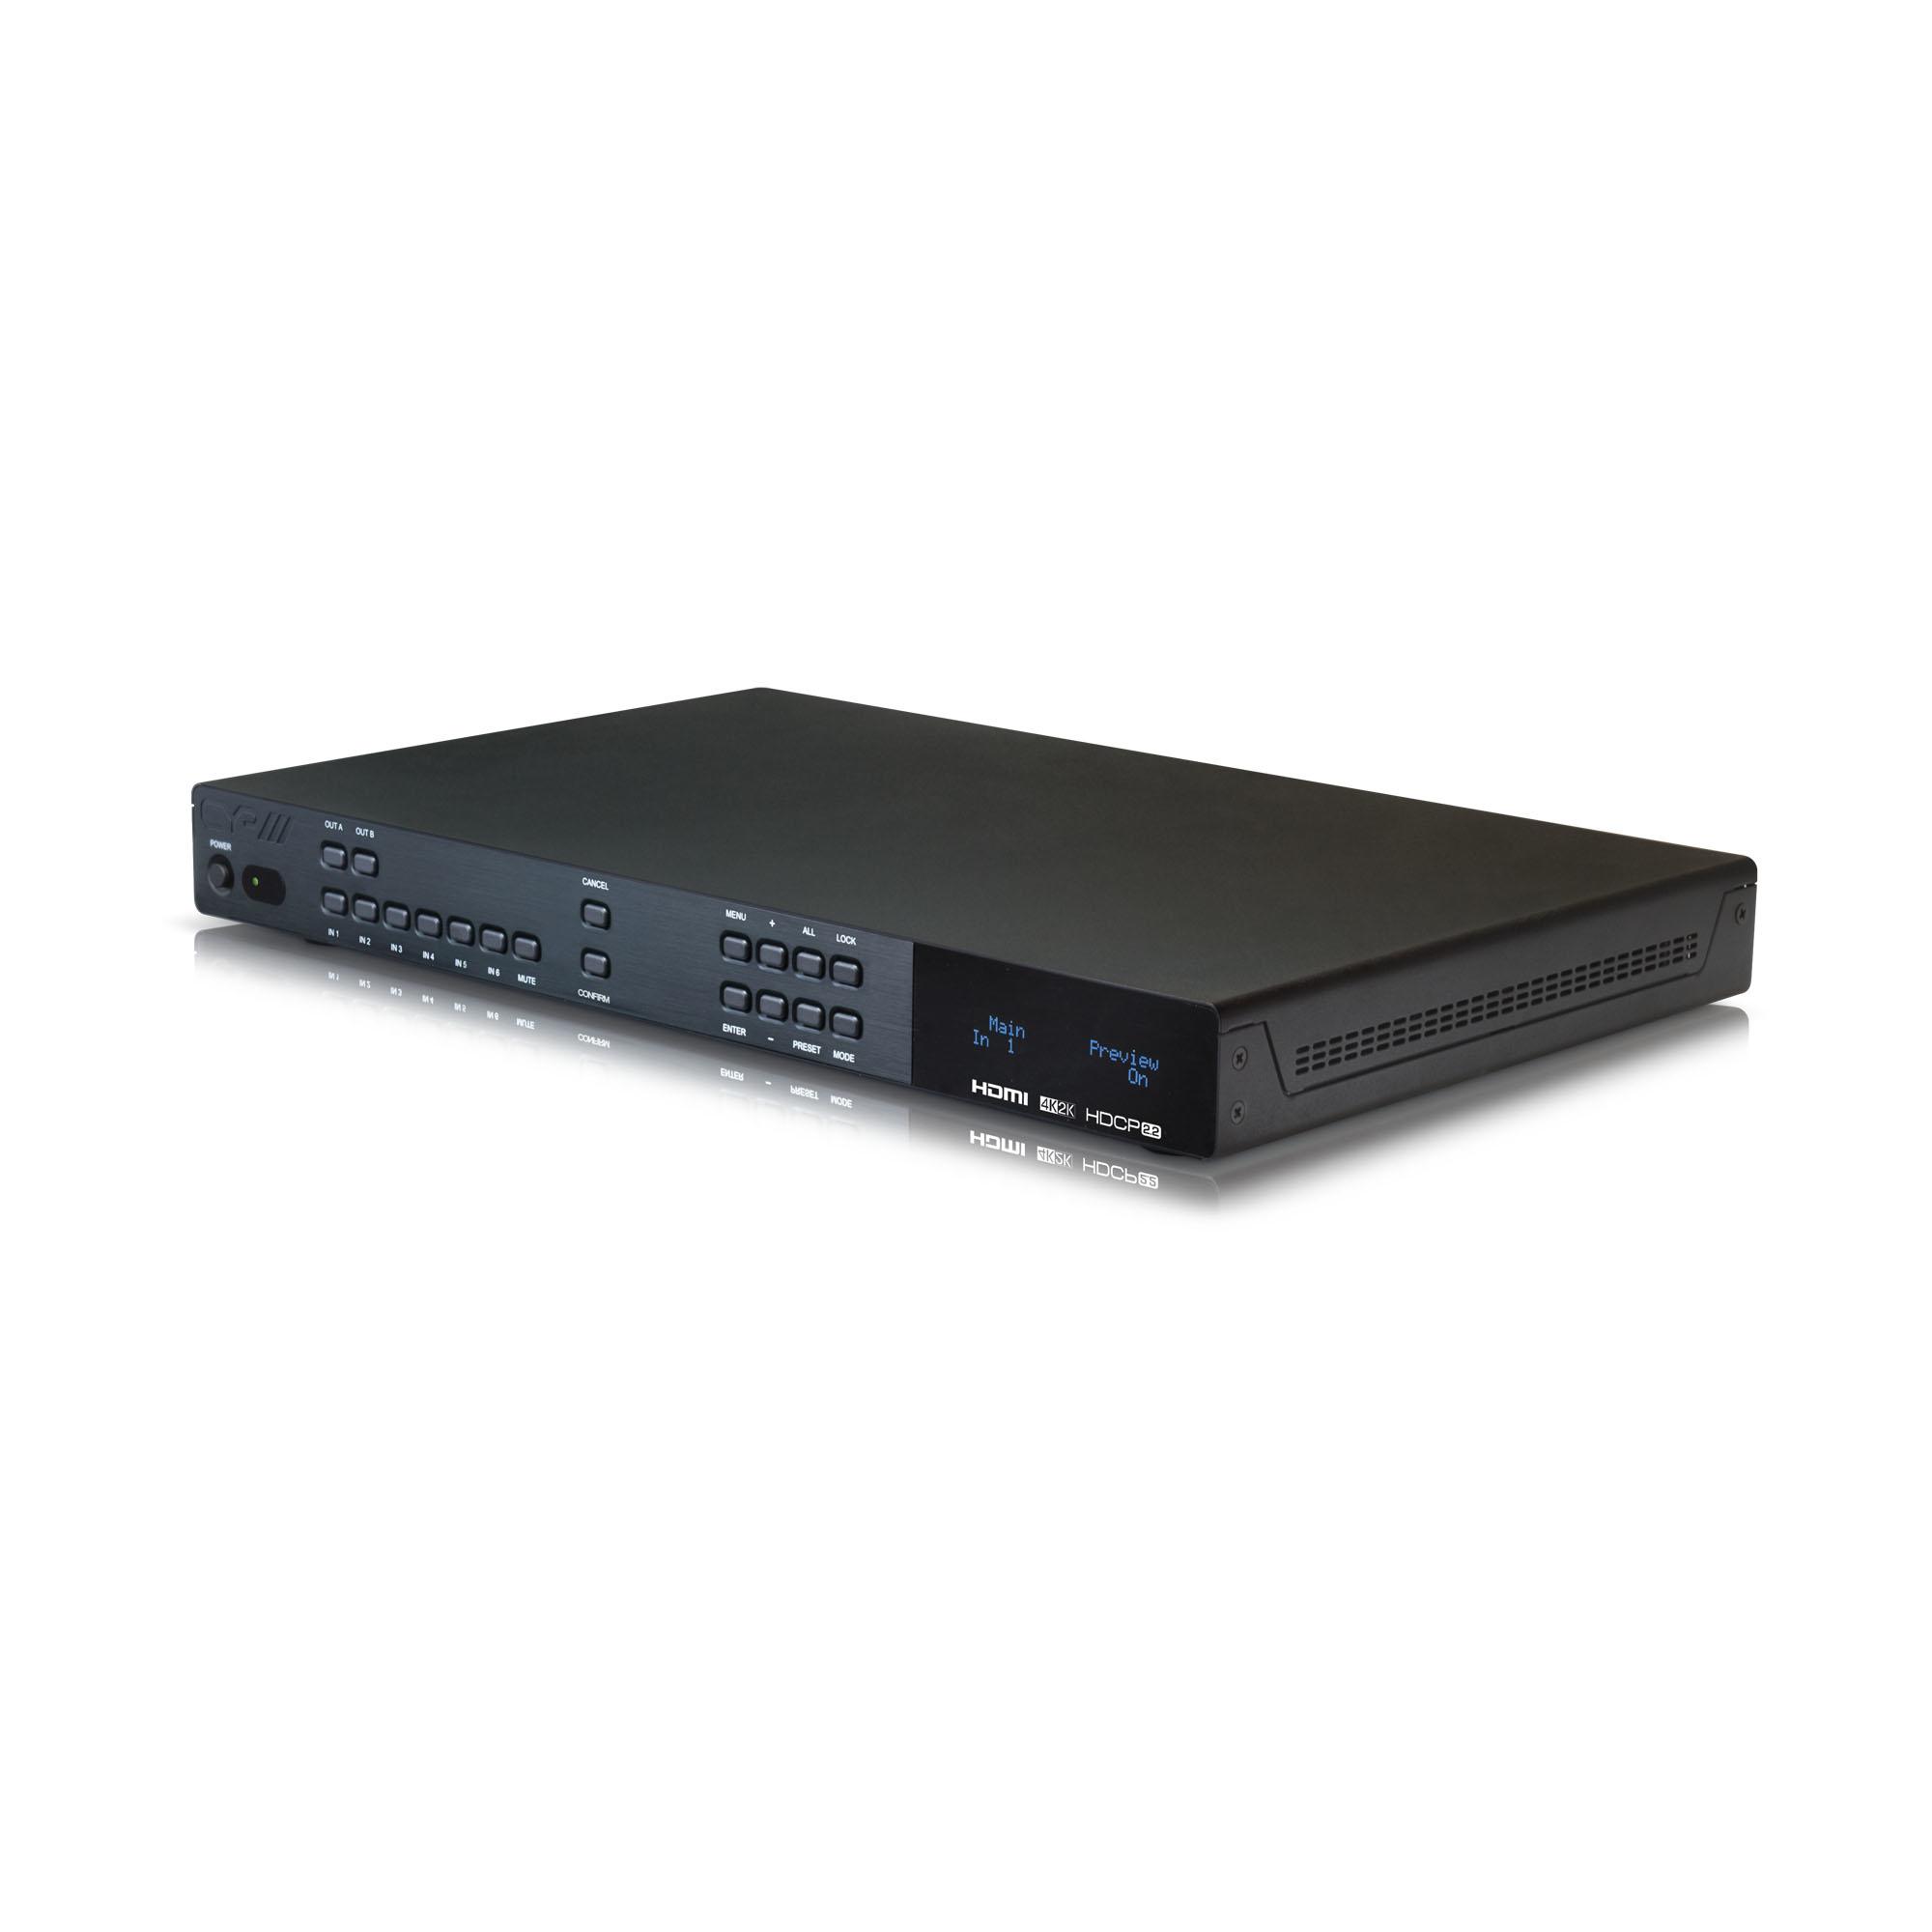 OR-HD62CD-4K22 6 x 2 HDMI Matrix Switch with Audio De-Embedding (4K, HDCP2.2)